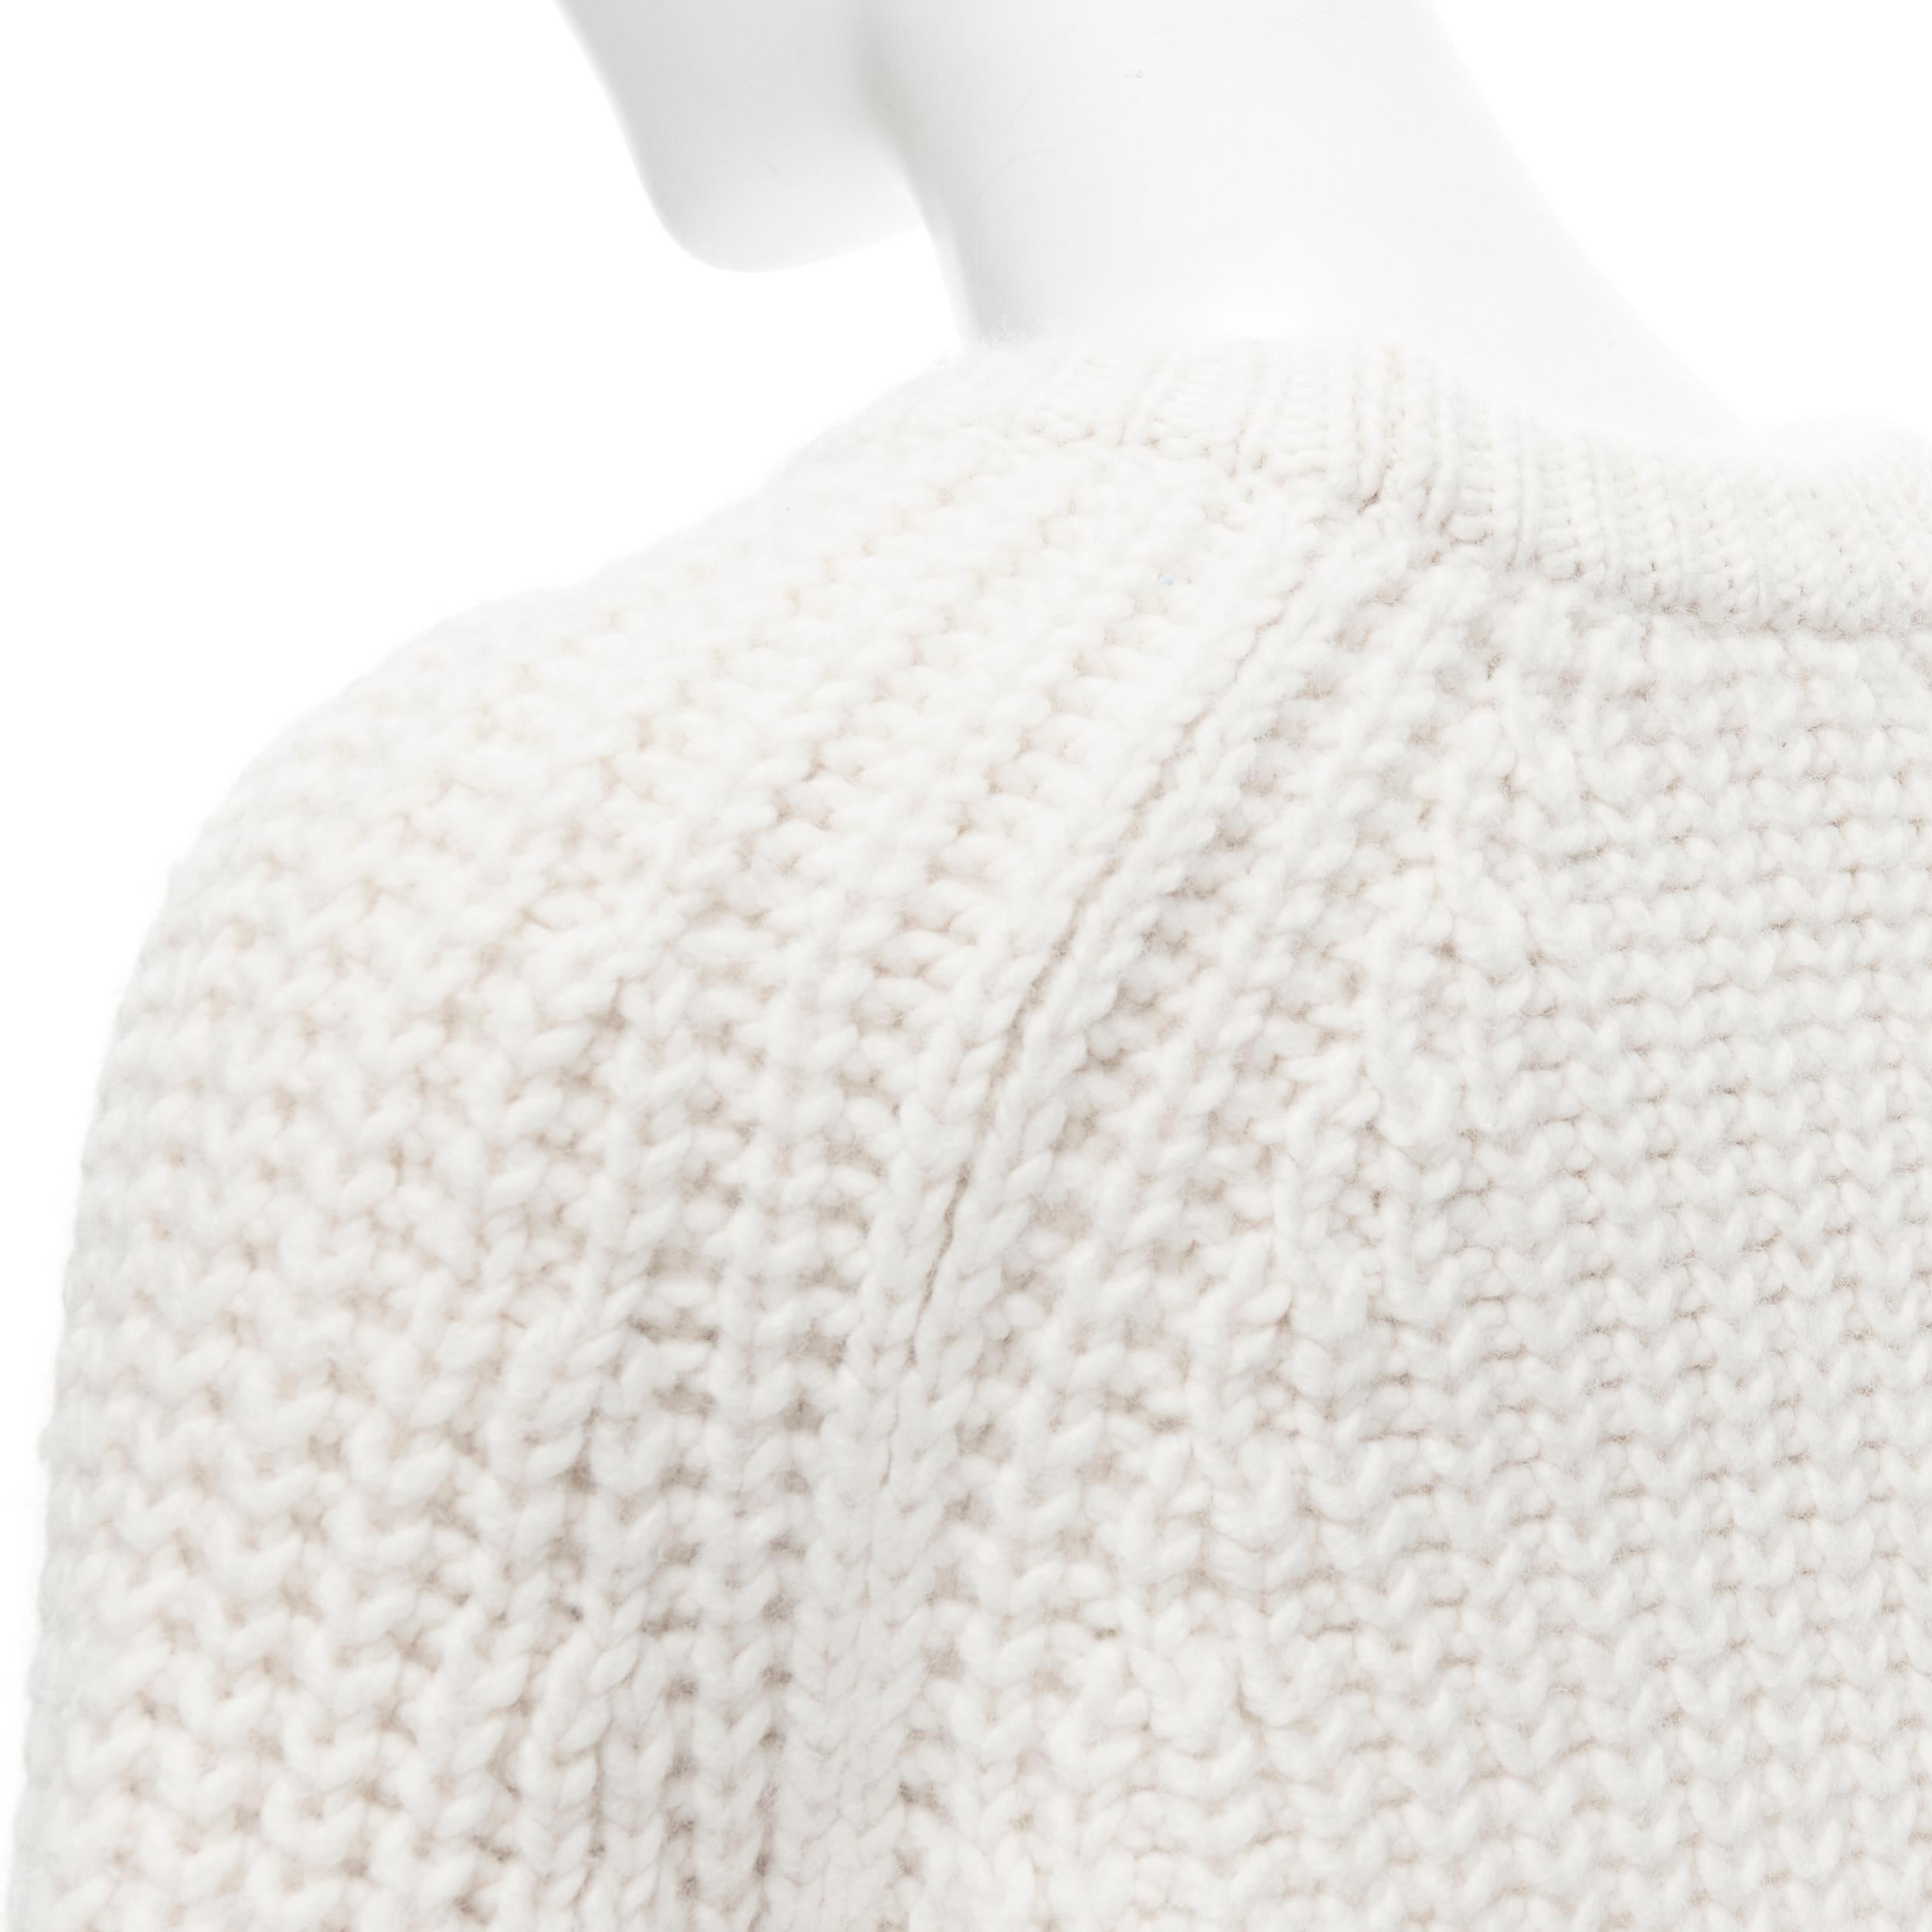 OLD CELINE Phoebe Philo heavy knit wool cuffed sleeve cropped sweater XS 1